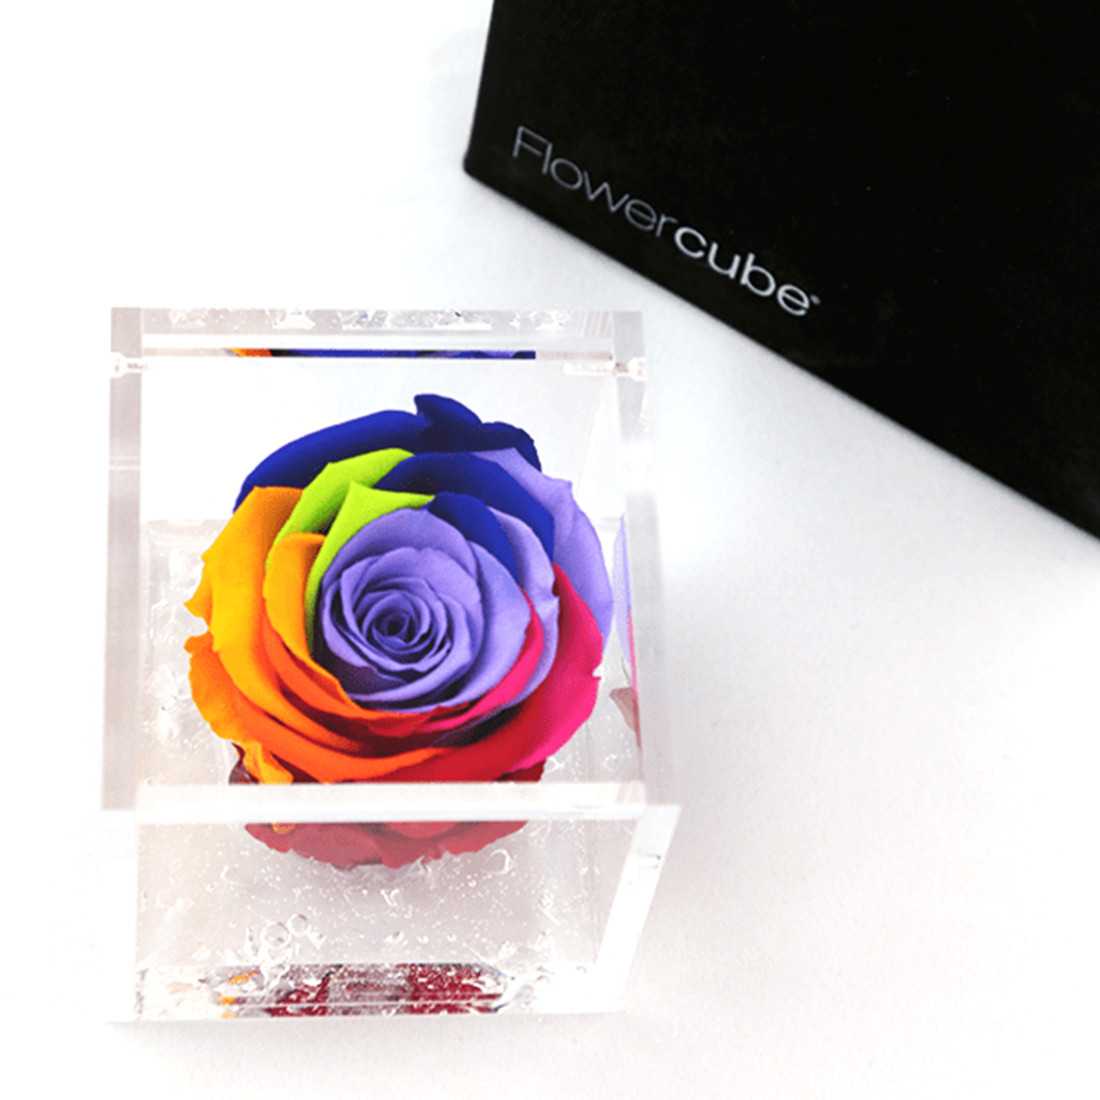 FlowerCube Rainbow 6x6 cm shop online